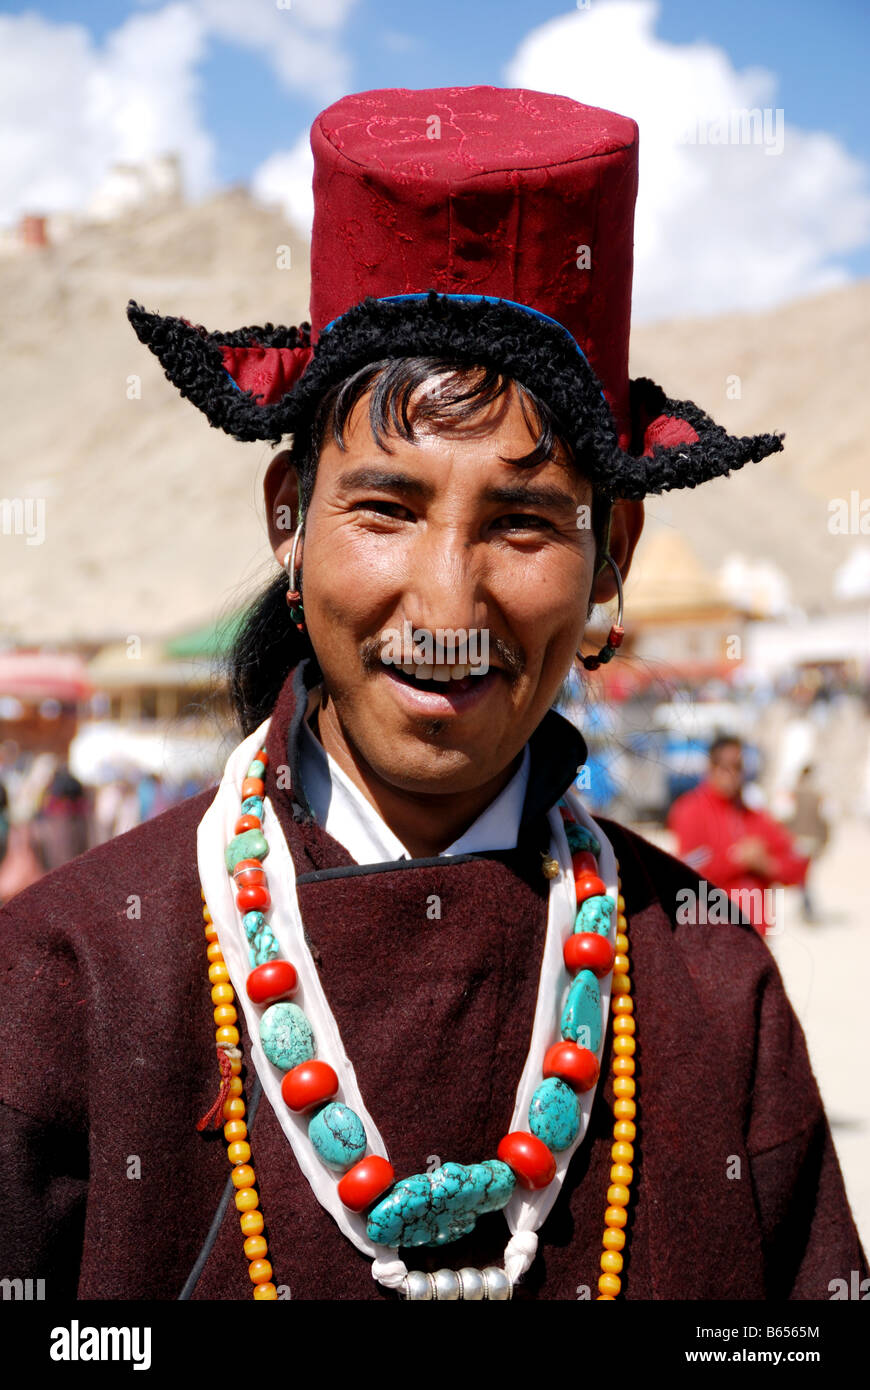 A Ladakhi Man Wearing Traditional Ladakhi Dress In Ladakh Festivales Stock Photo Alamy